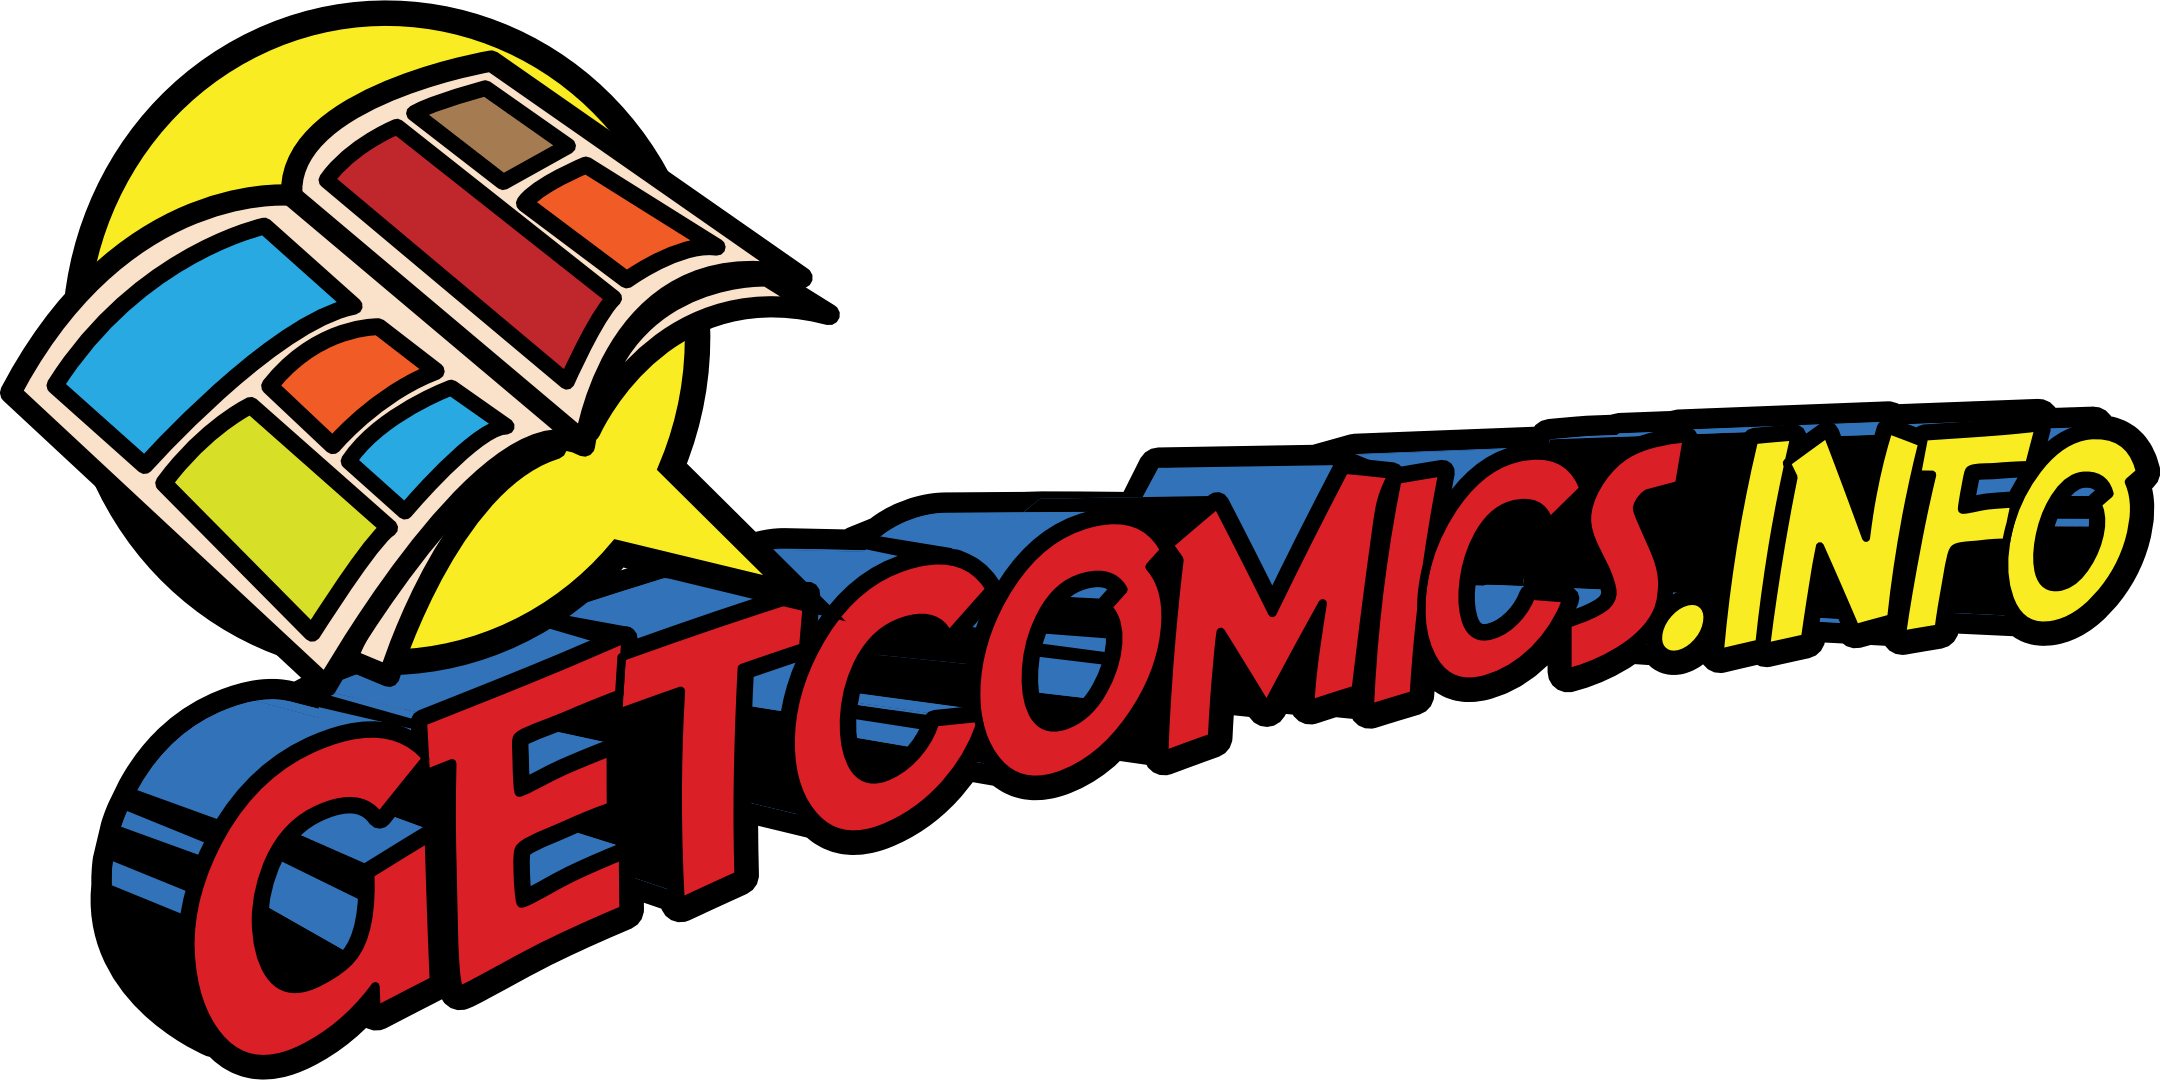 getcomics.info